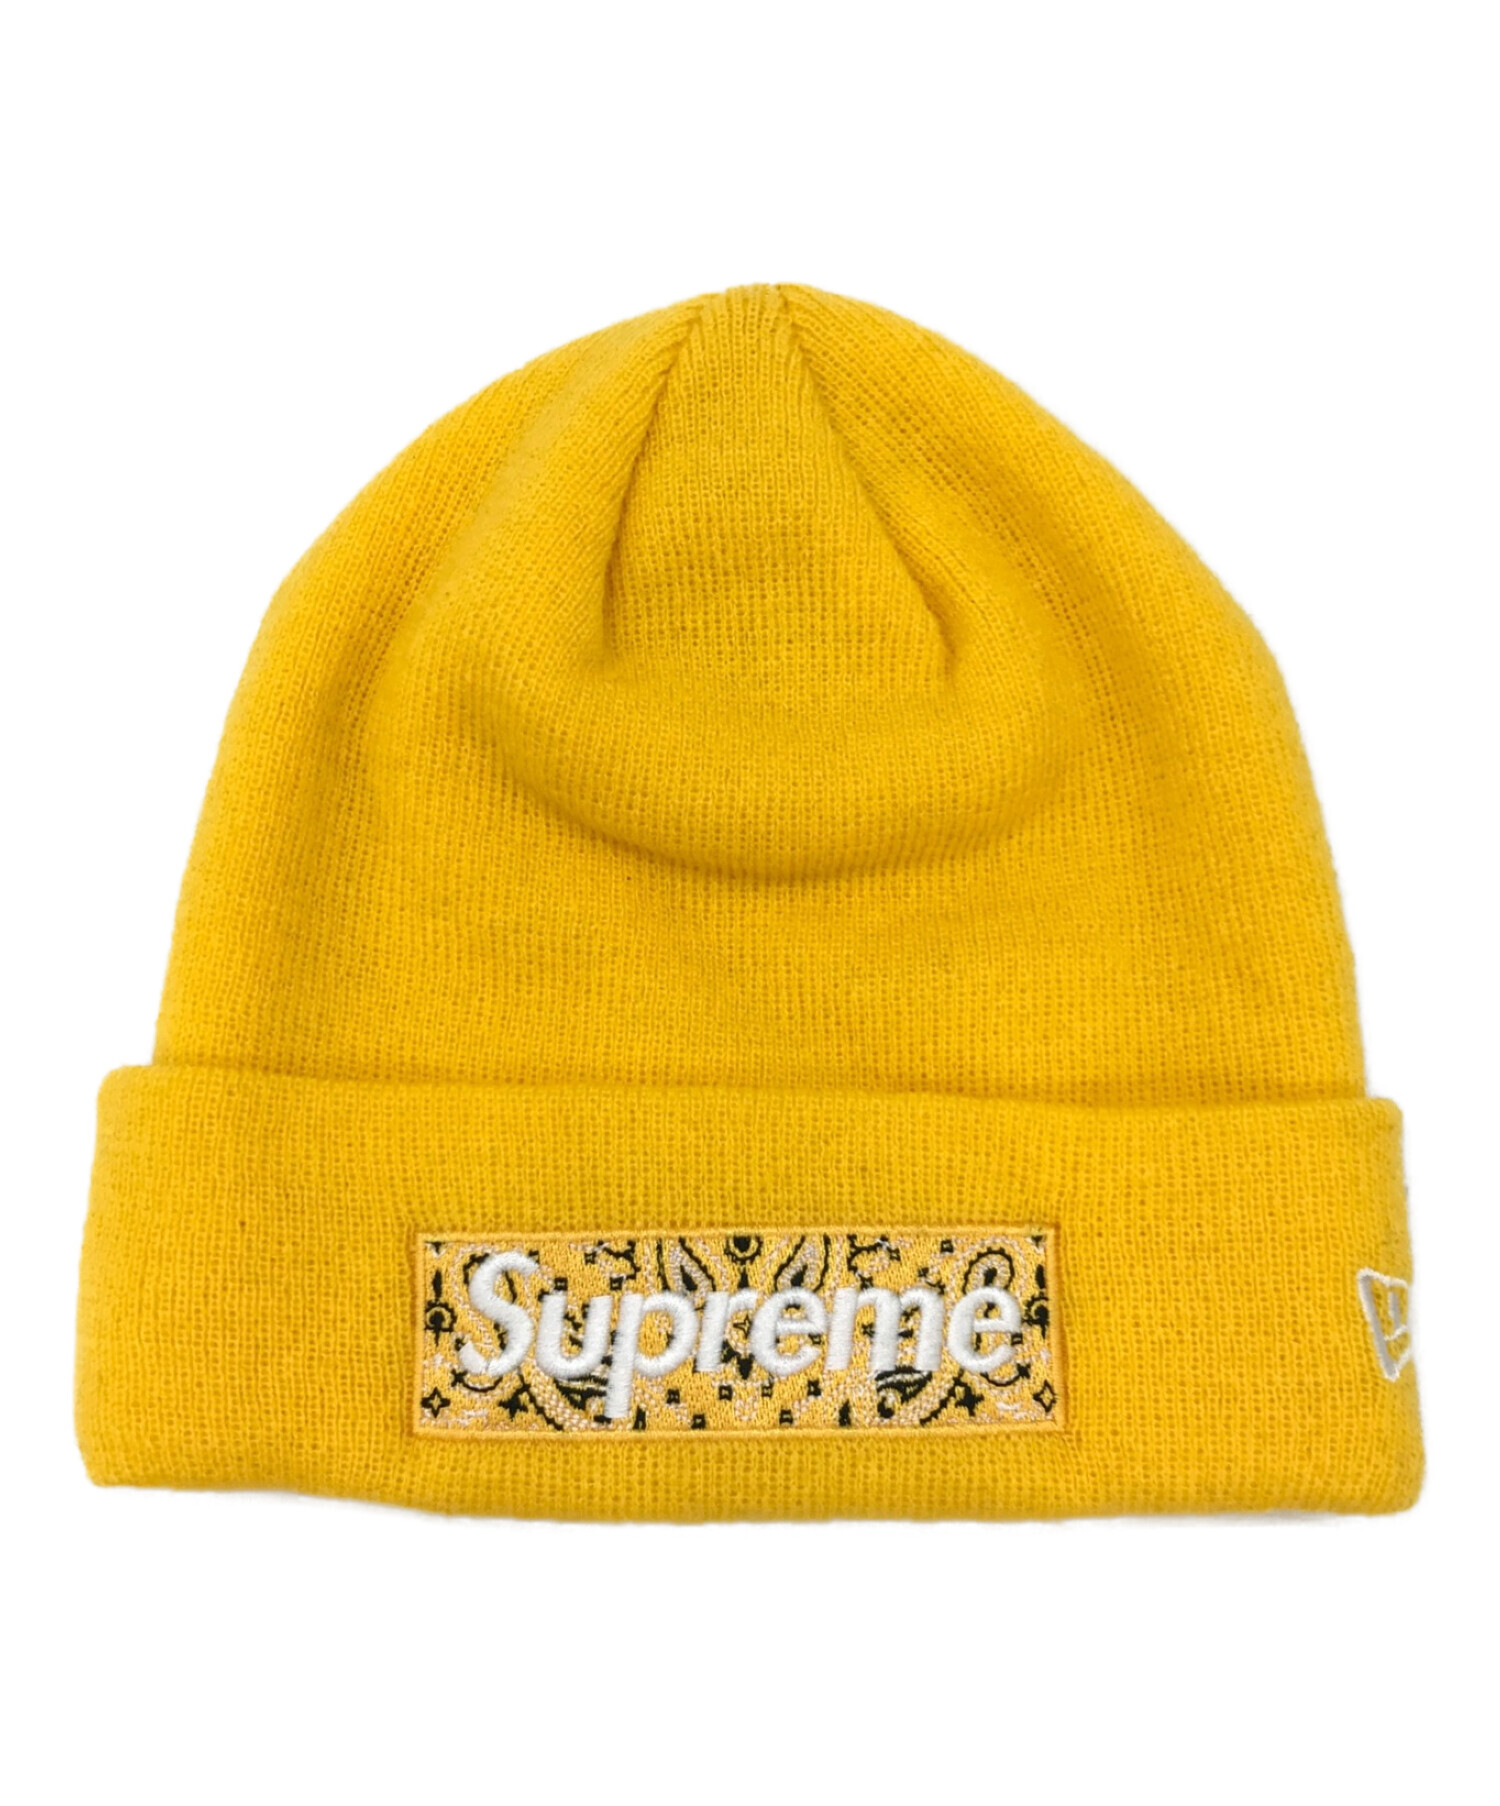 Supreme New Era Box Logo Beanie Yellow